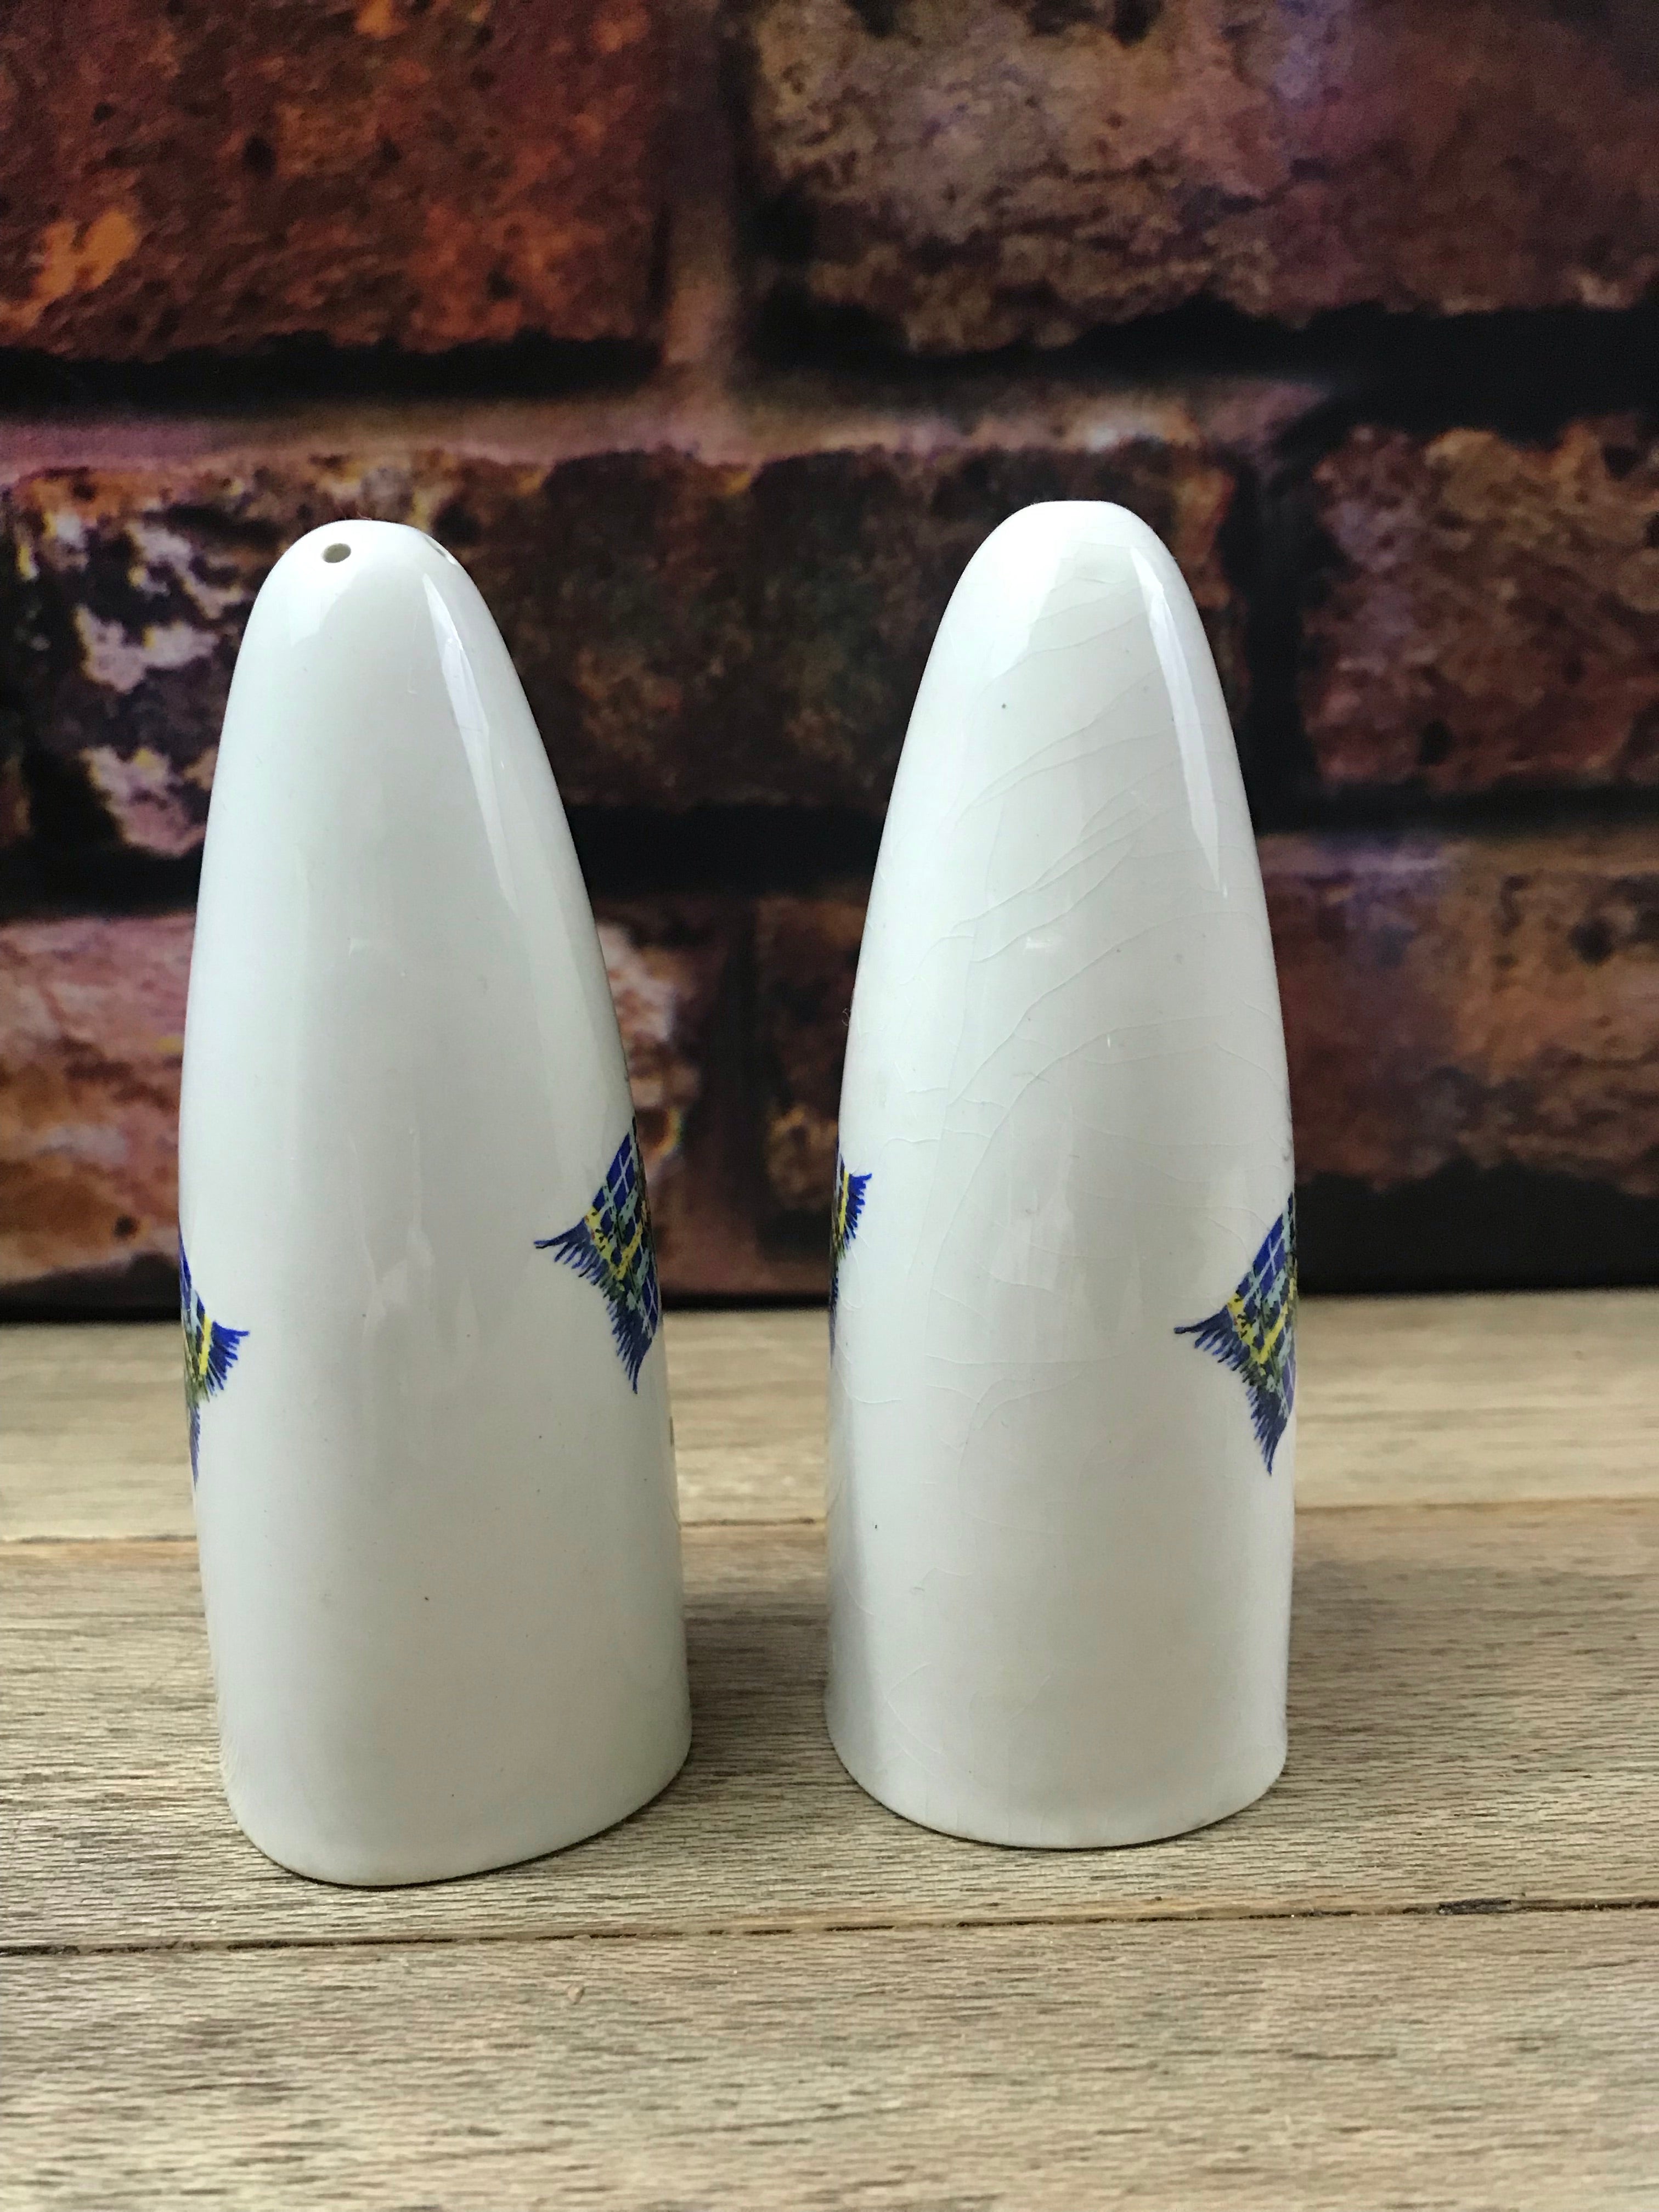 Vintage Ceramic Nova Scotia Tartan & Floral Emblem Salt & Pepper Shakers - England